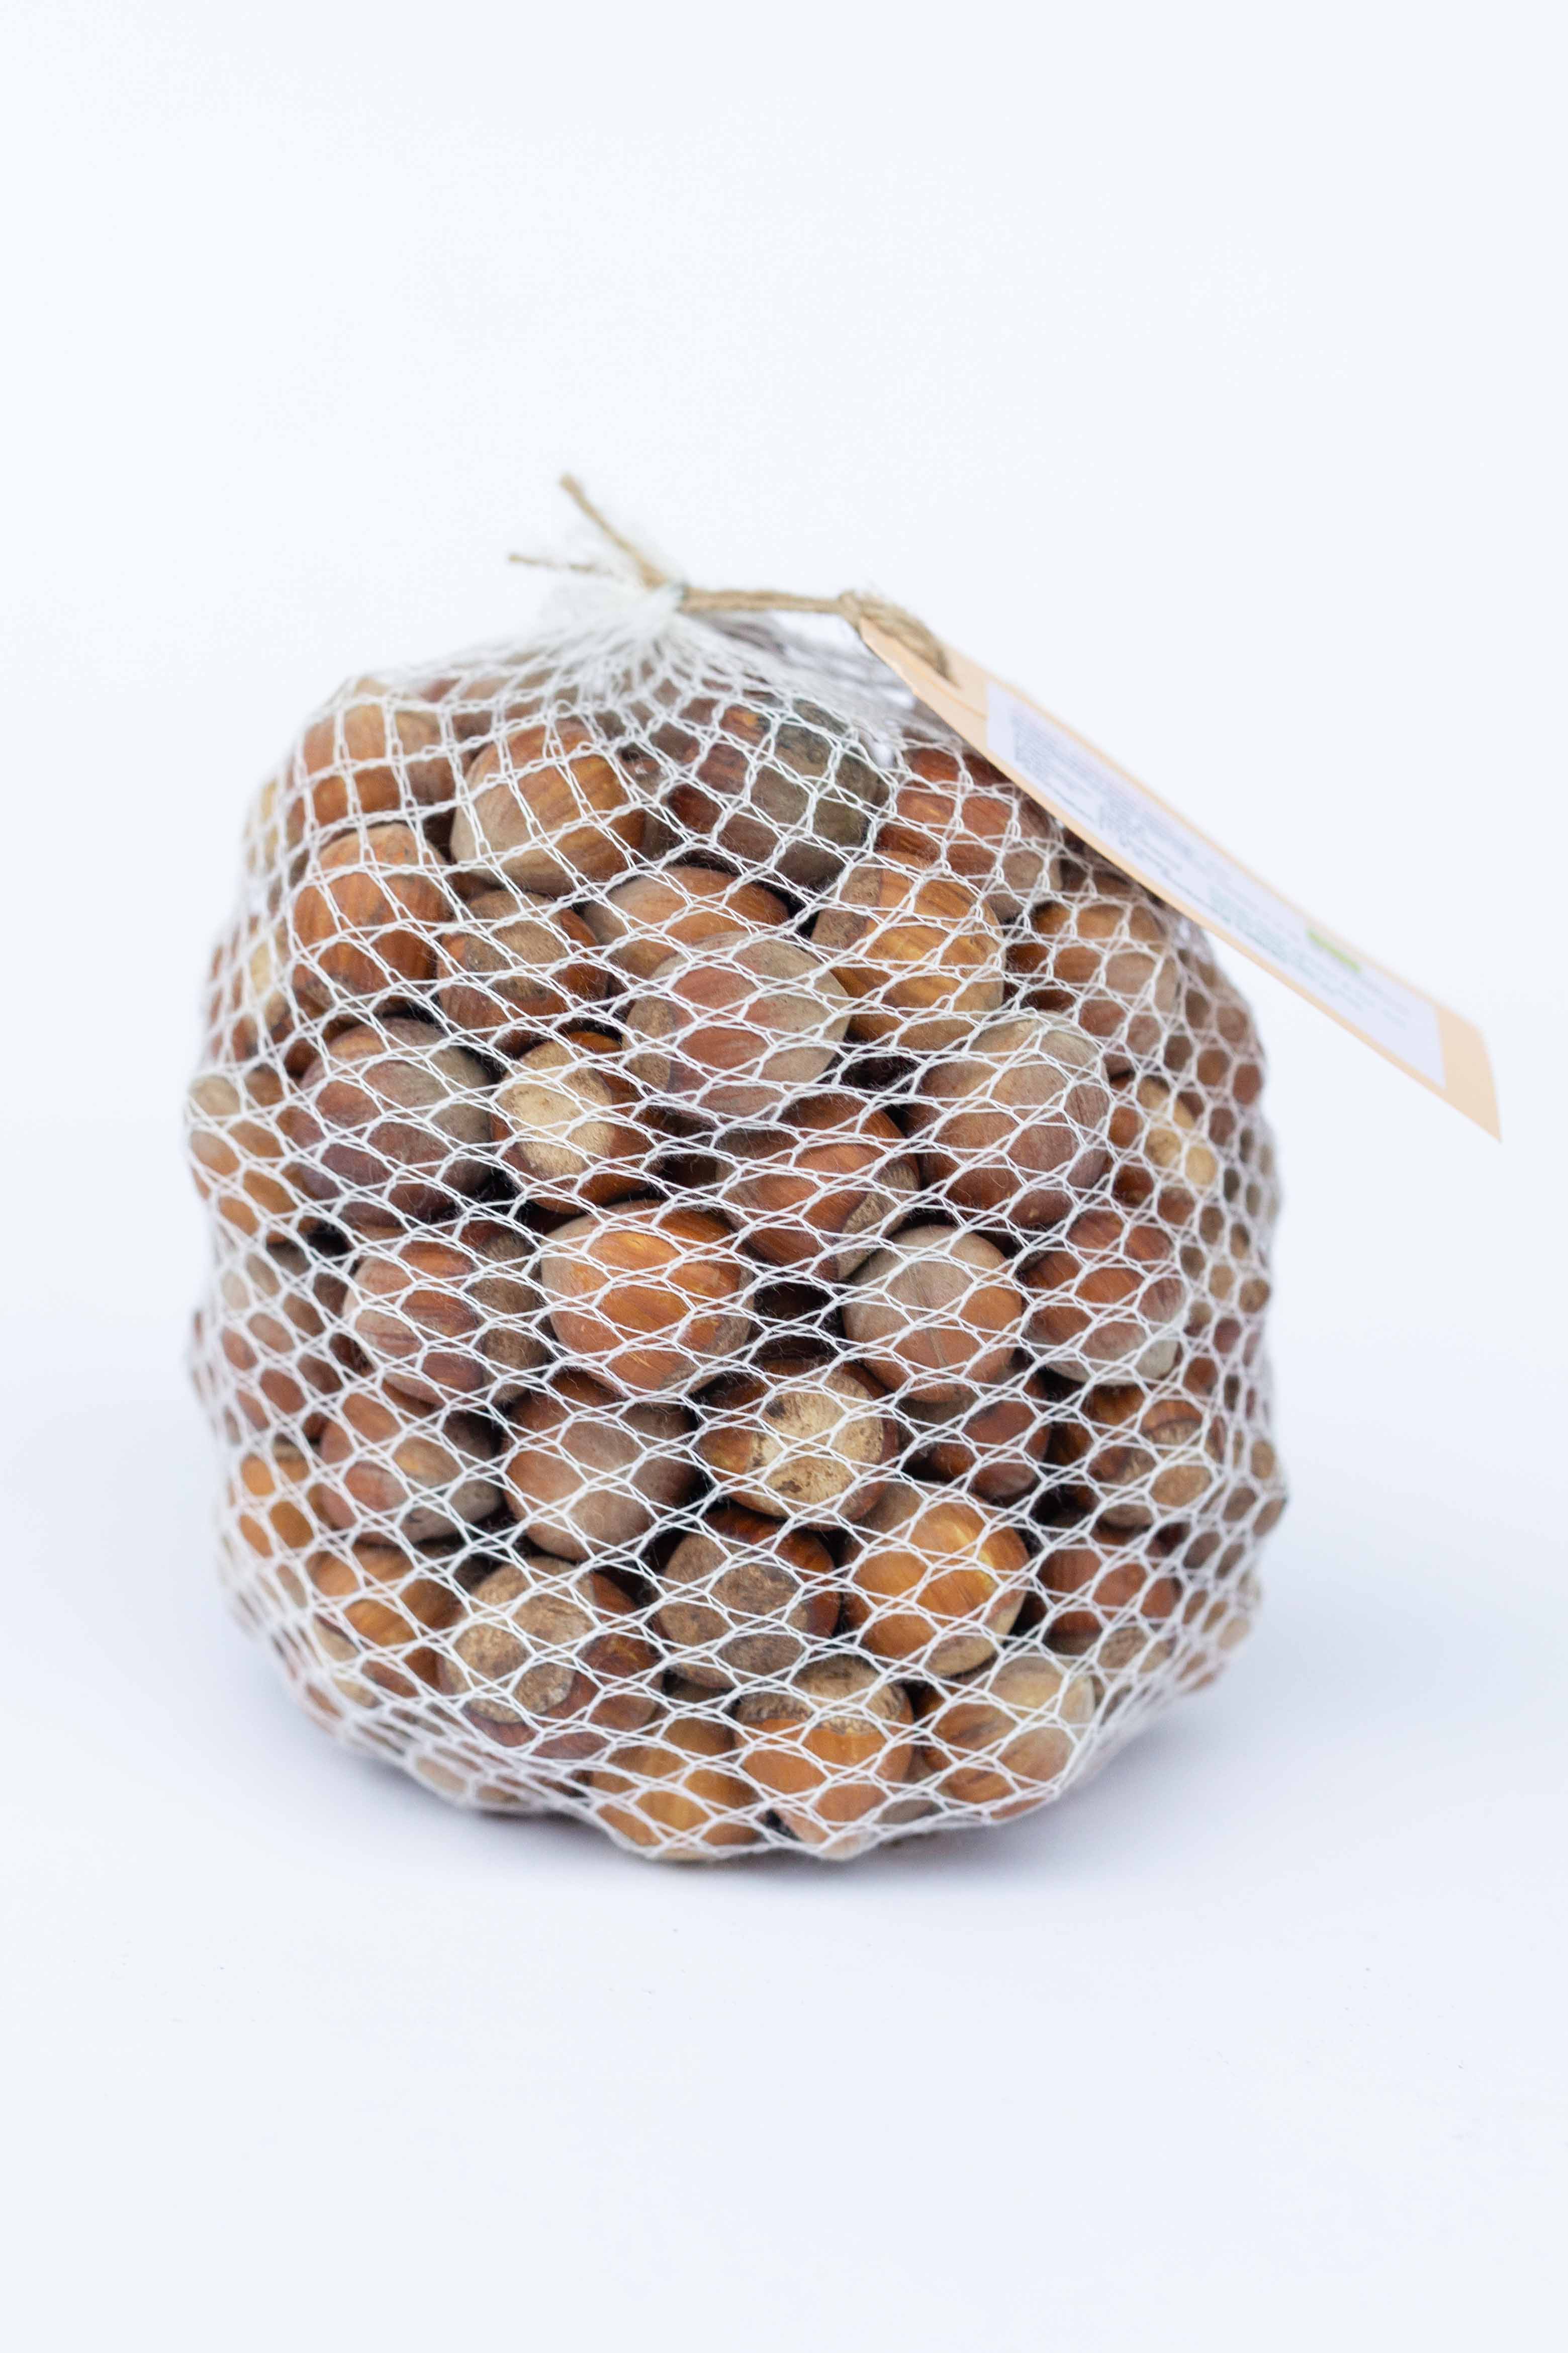 Organic hazelnuts in shell, Germany Grading > 18 mm